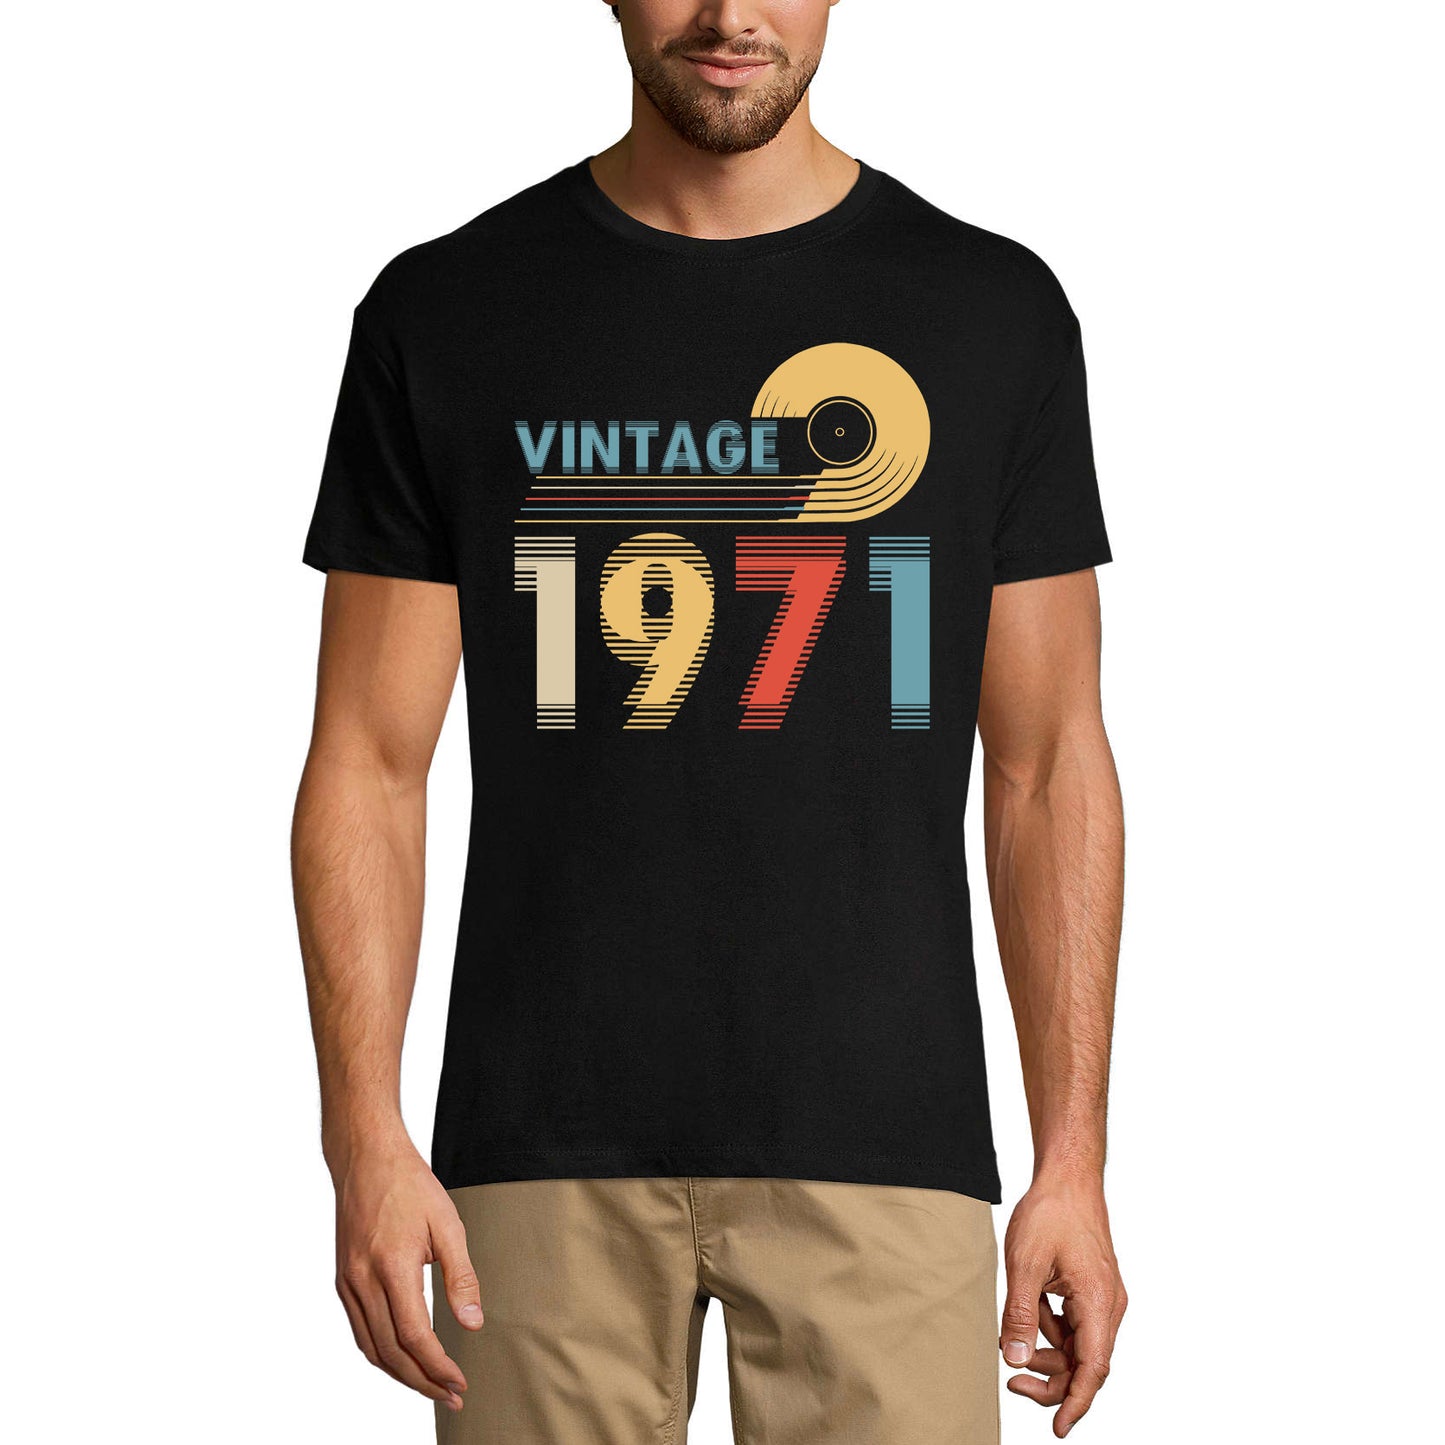 ULTRABASIC Men's T-Shirt Vintage 1971 - Retro Blurry 50th Birthday Gift Tee Shirt